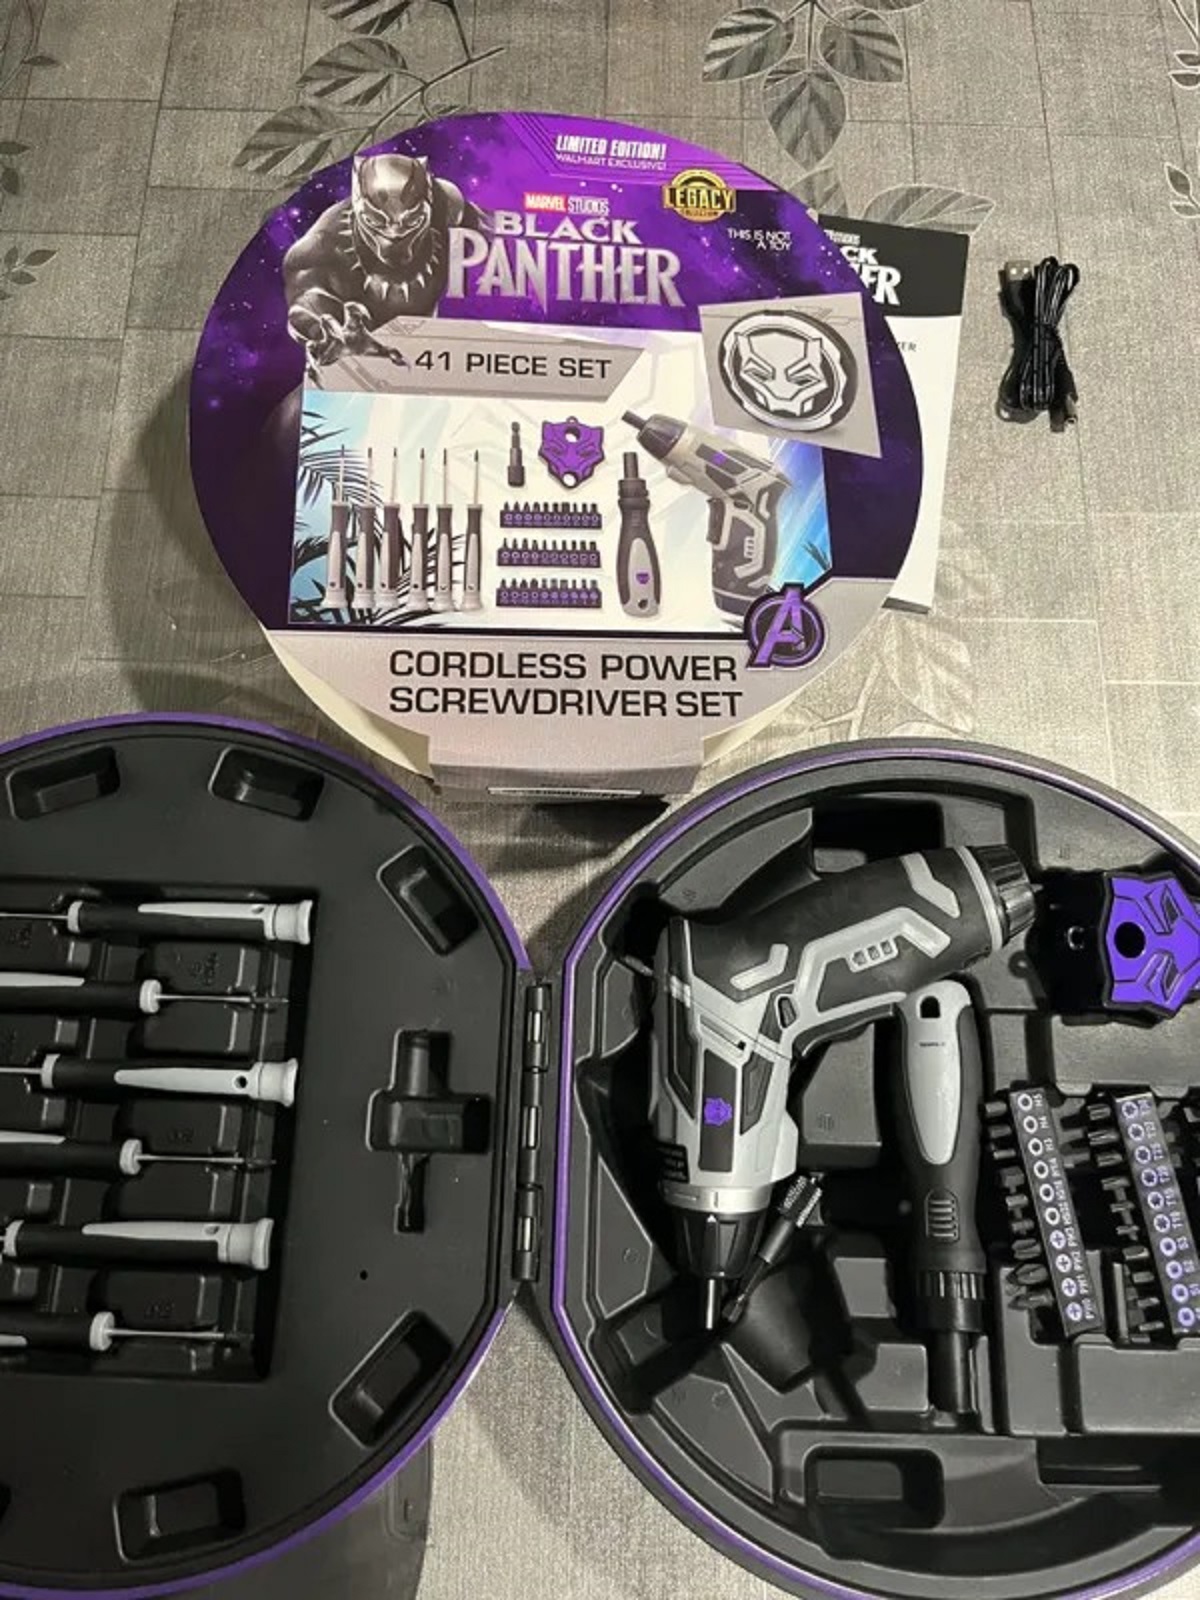 mouse - Black Panther 41 Piece Set Cordless Power Screwdriver Set